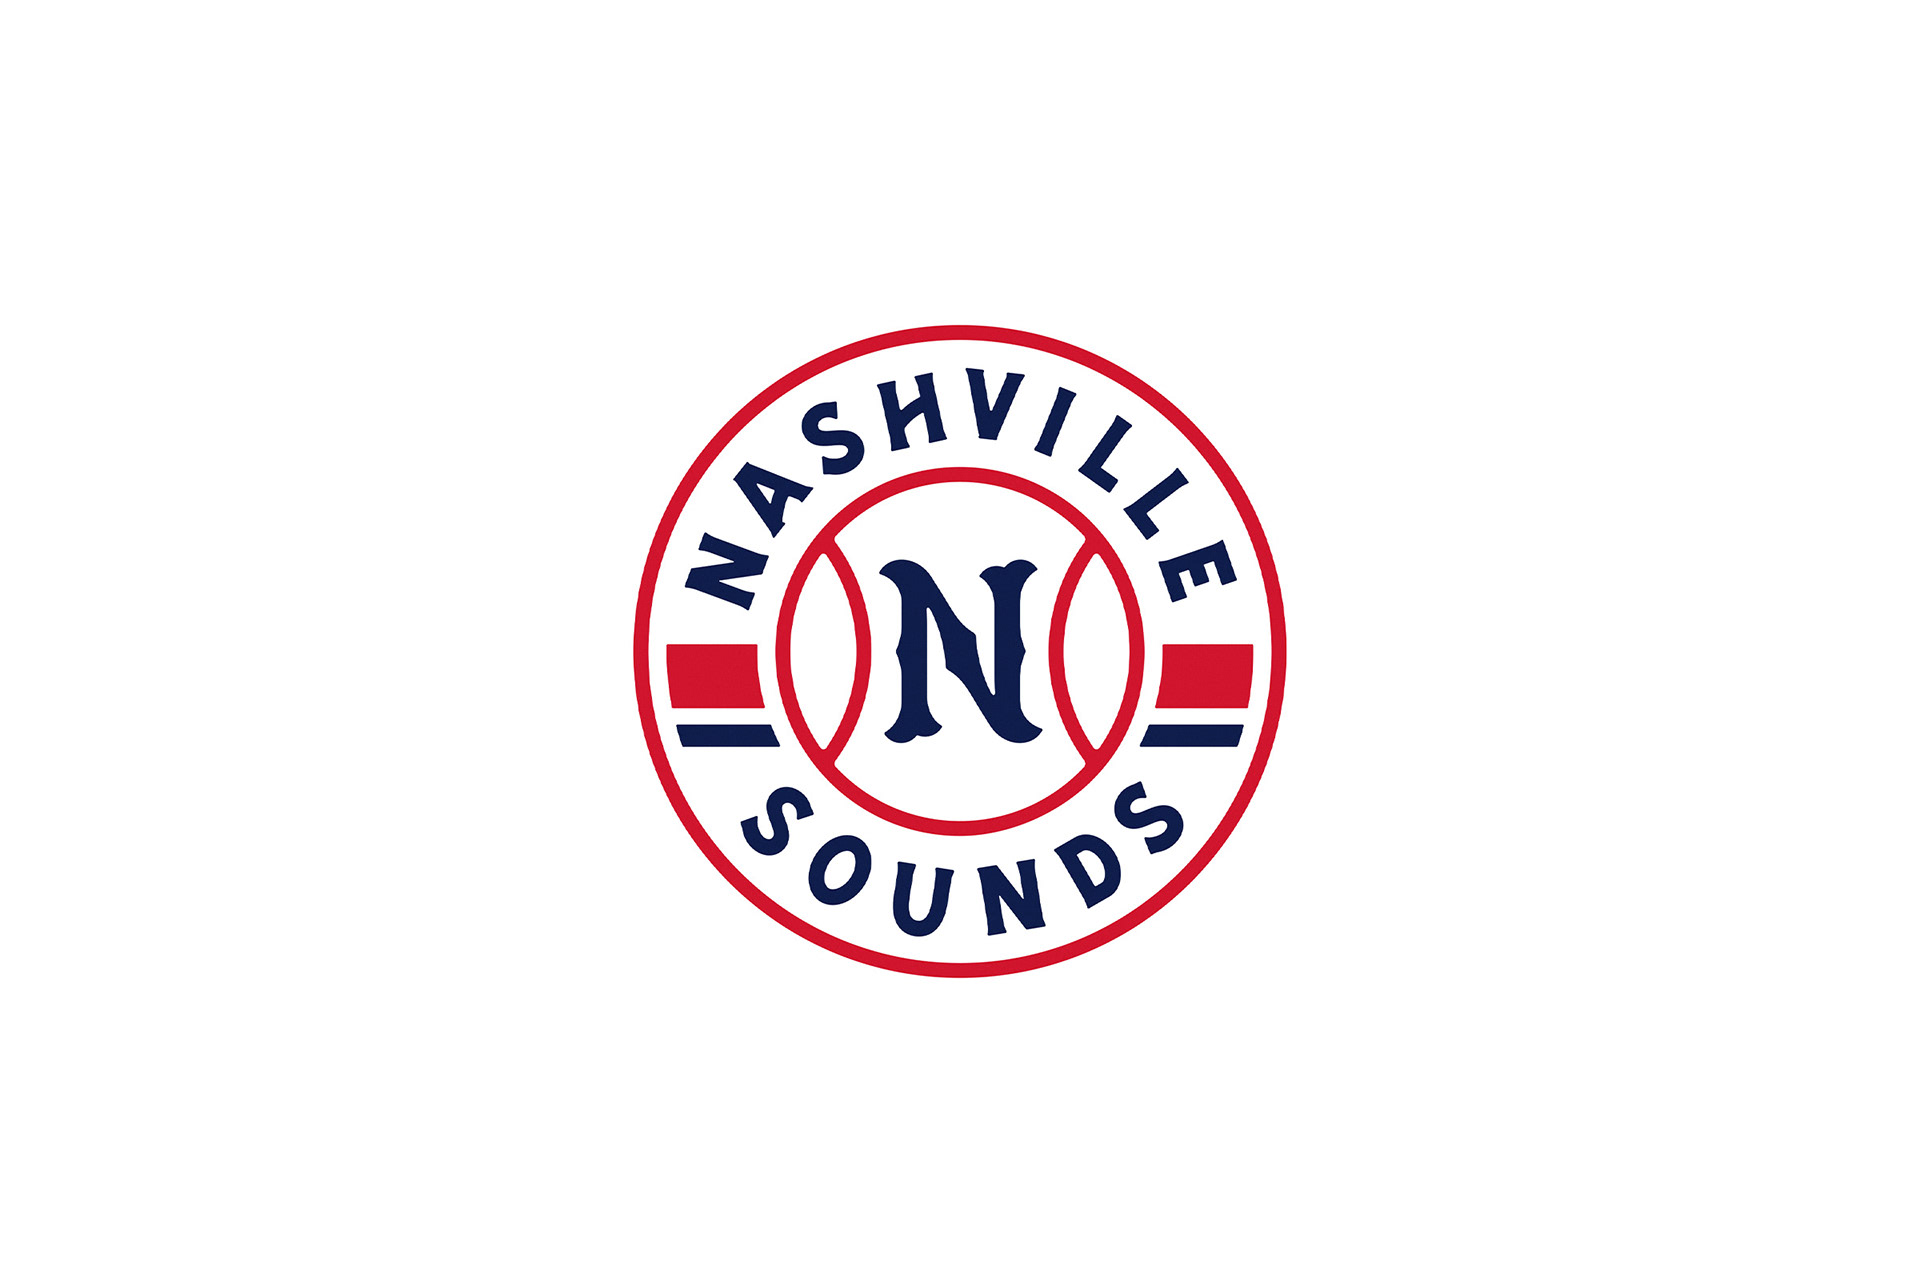 Nashville Sounds | MiLB Brand Identity on Behancee3be5a90089799.5e0e08682e893.jpg